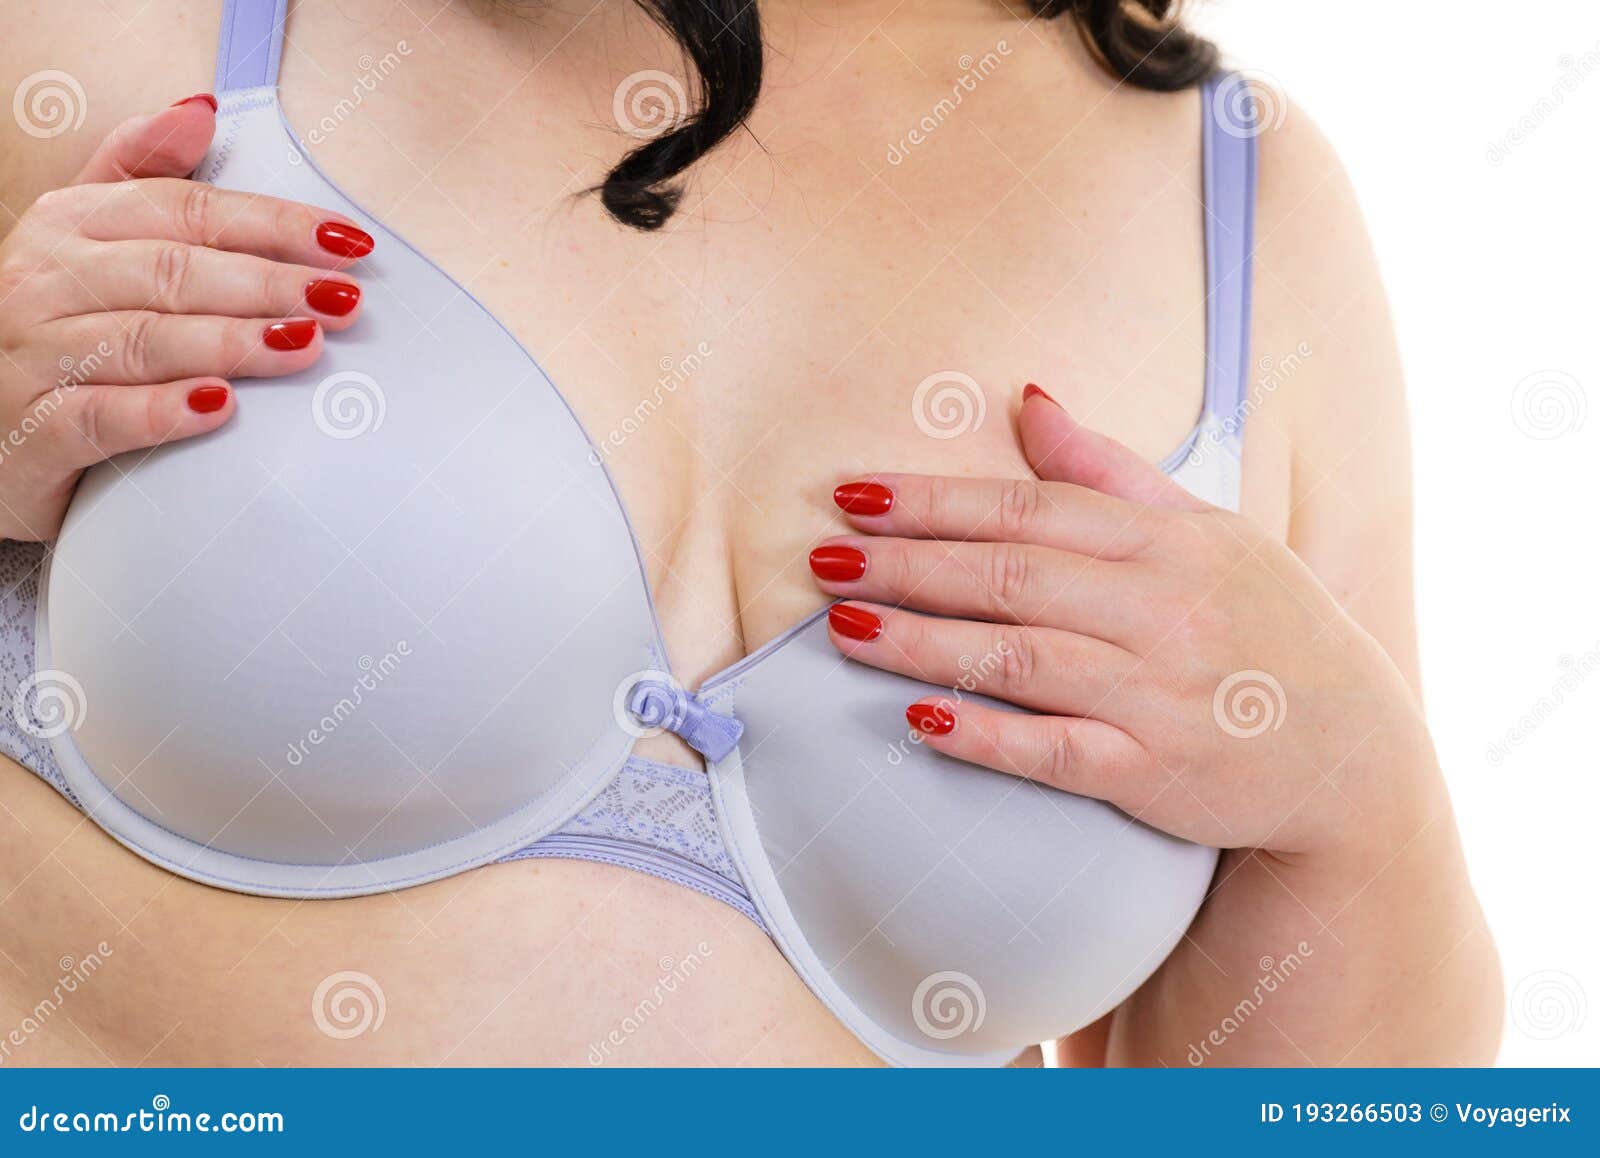 чашечки на женской груди фото 73